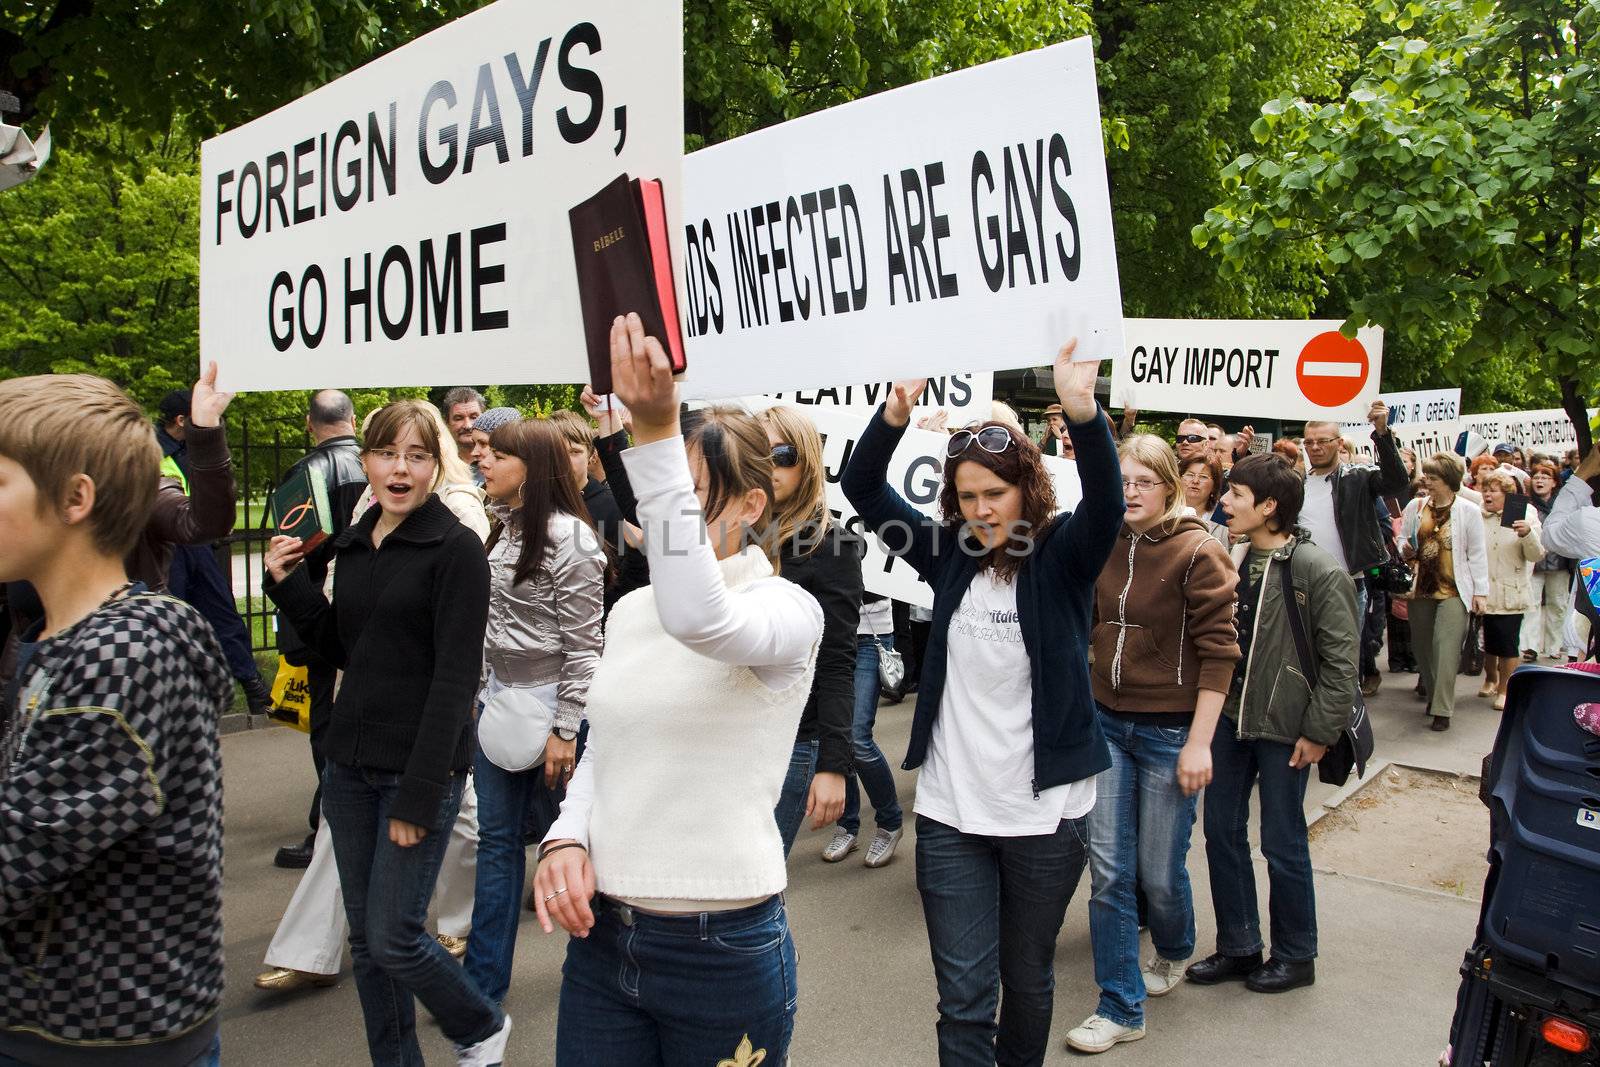 Protestors against Riga pride 2009 by ints